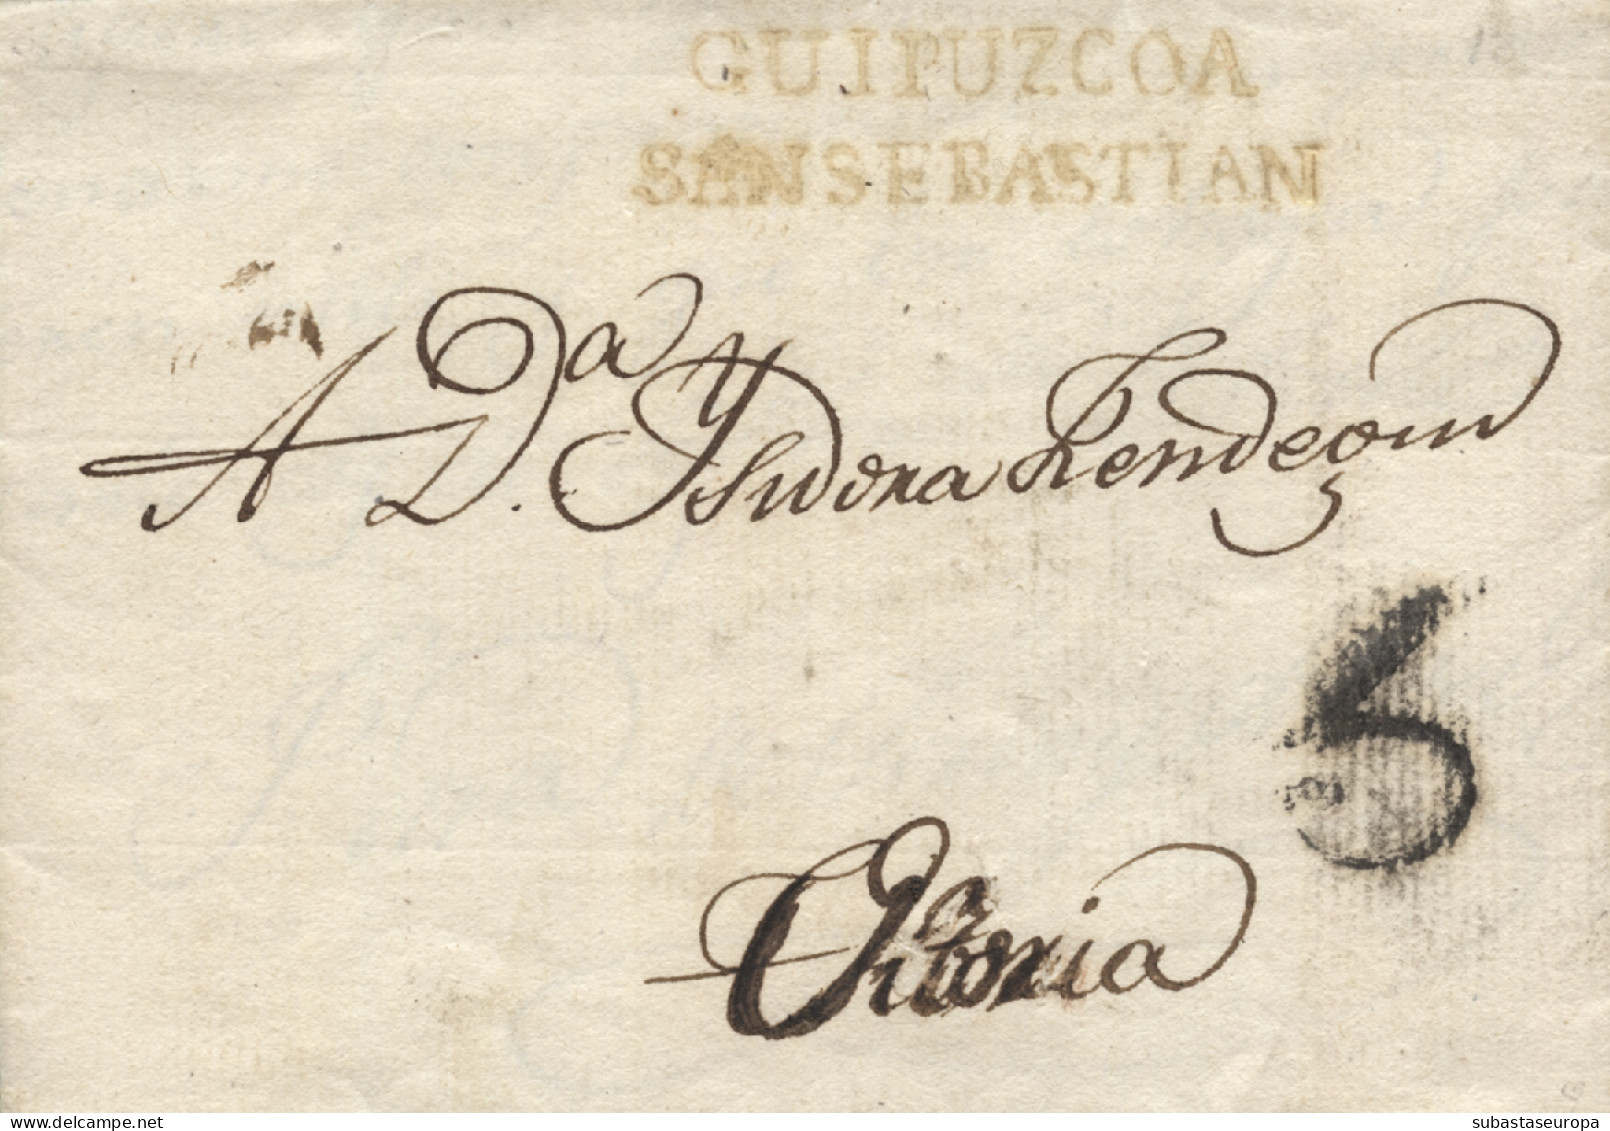 D.P. 11. 1812 (6 ABR). Carta De San Sebastián A Vitoria. Marca Nº 20R. Porteo 6. Preciosa. - ...-1850 Vorphilatelie